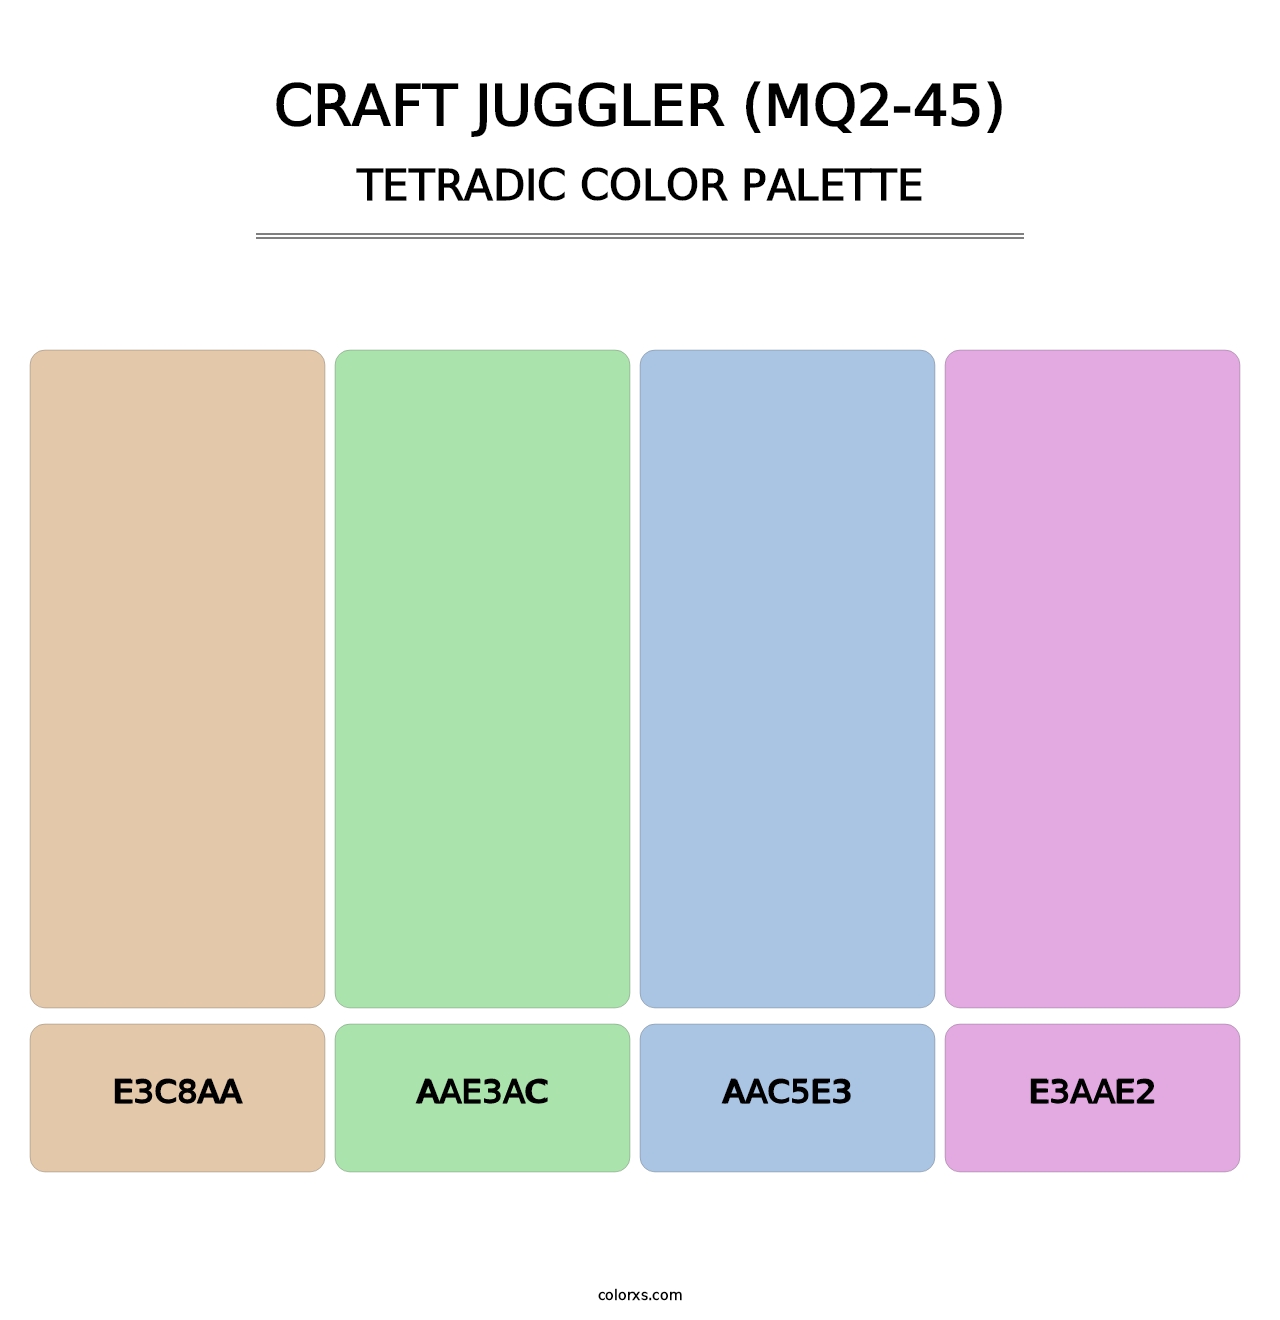 Craft Juggler (MQ2-45) - Tetradic Color Palette